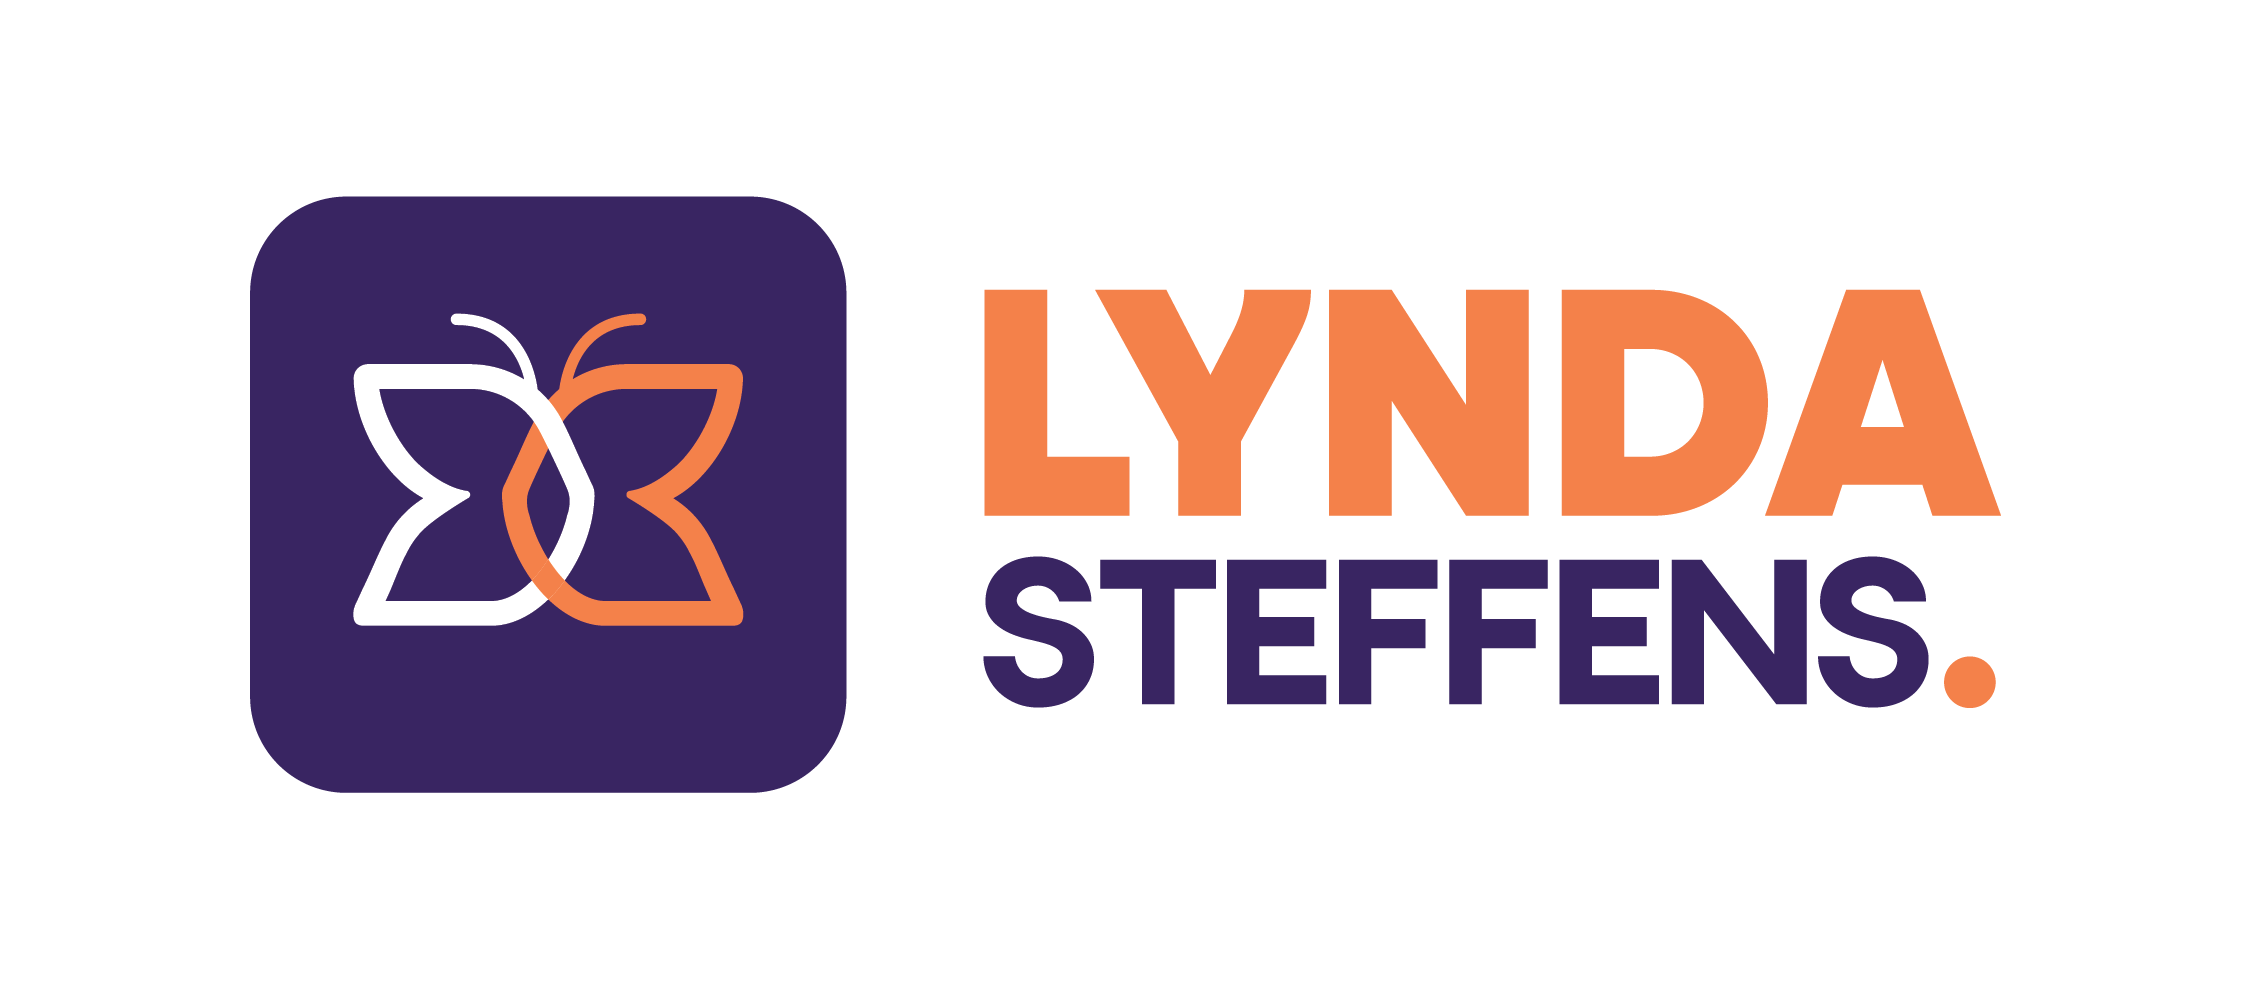 Lynda Steffens